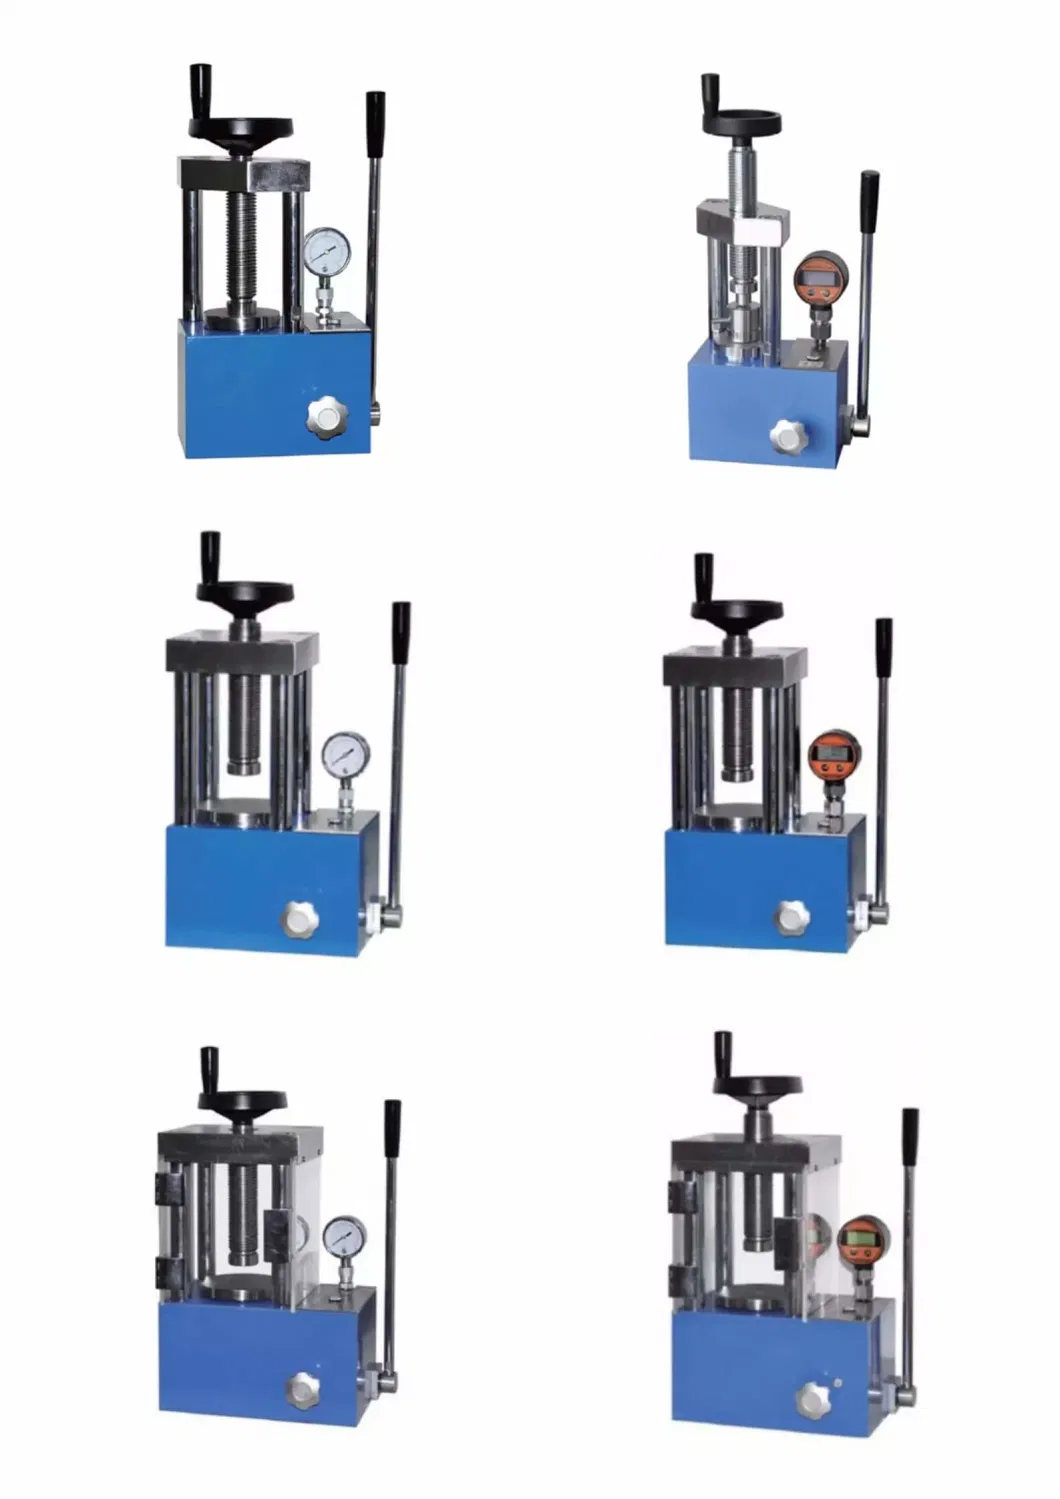 TMAXCN Brand 15t Laboratory Small Manual Hydraulic Press Machine for Material Pressing